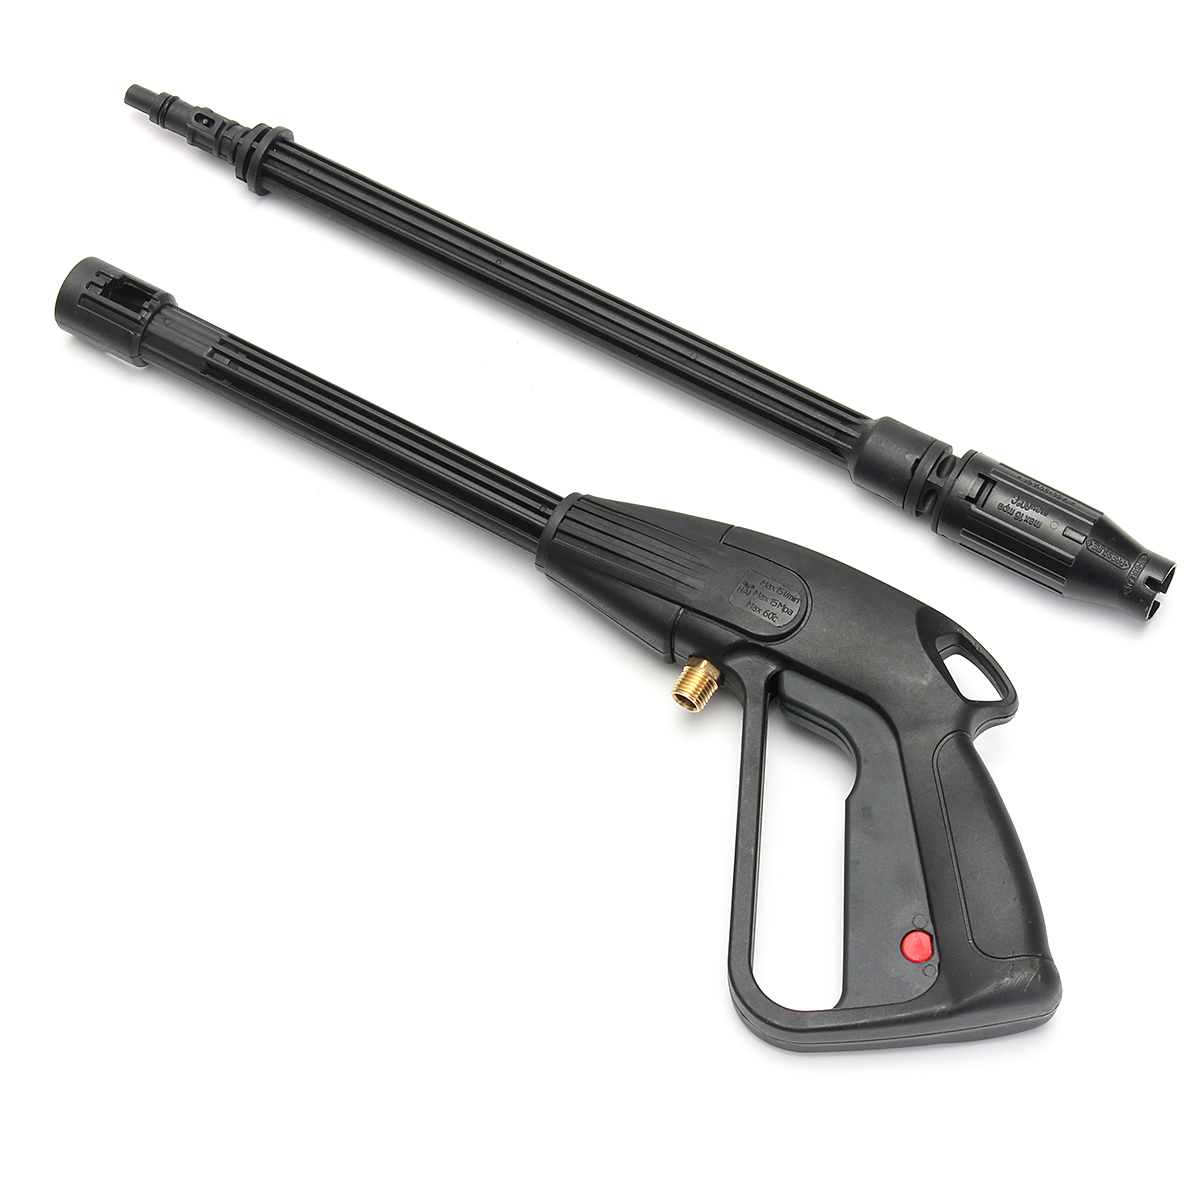 160 bar High Pressure Washer Spray Gun Lance Trigger Jet Wash Water Gun for Car